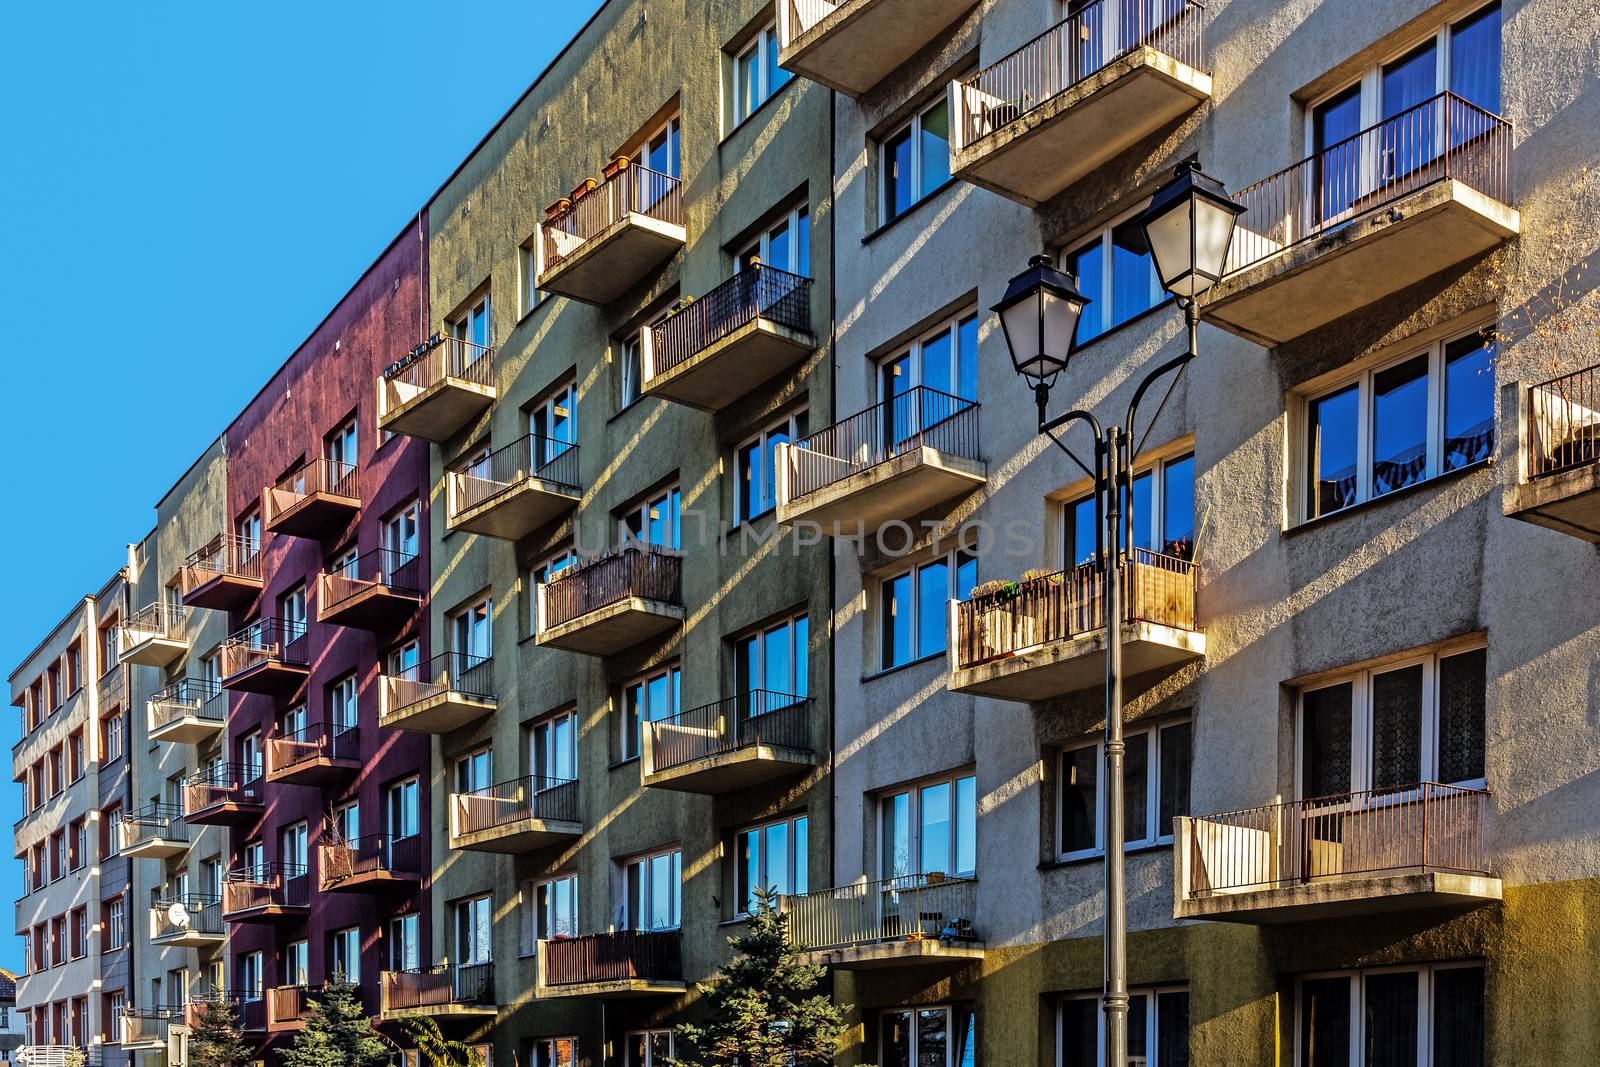 Ordinary residential blocks in Katowice, Silesia region, Poland.